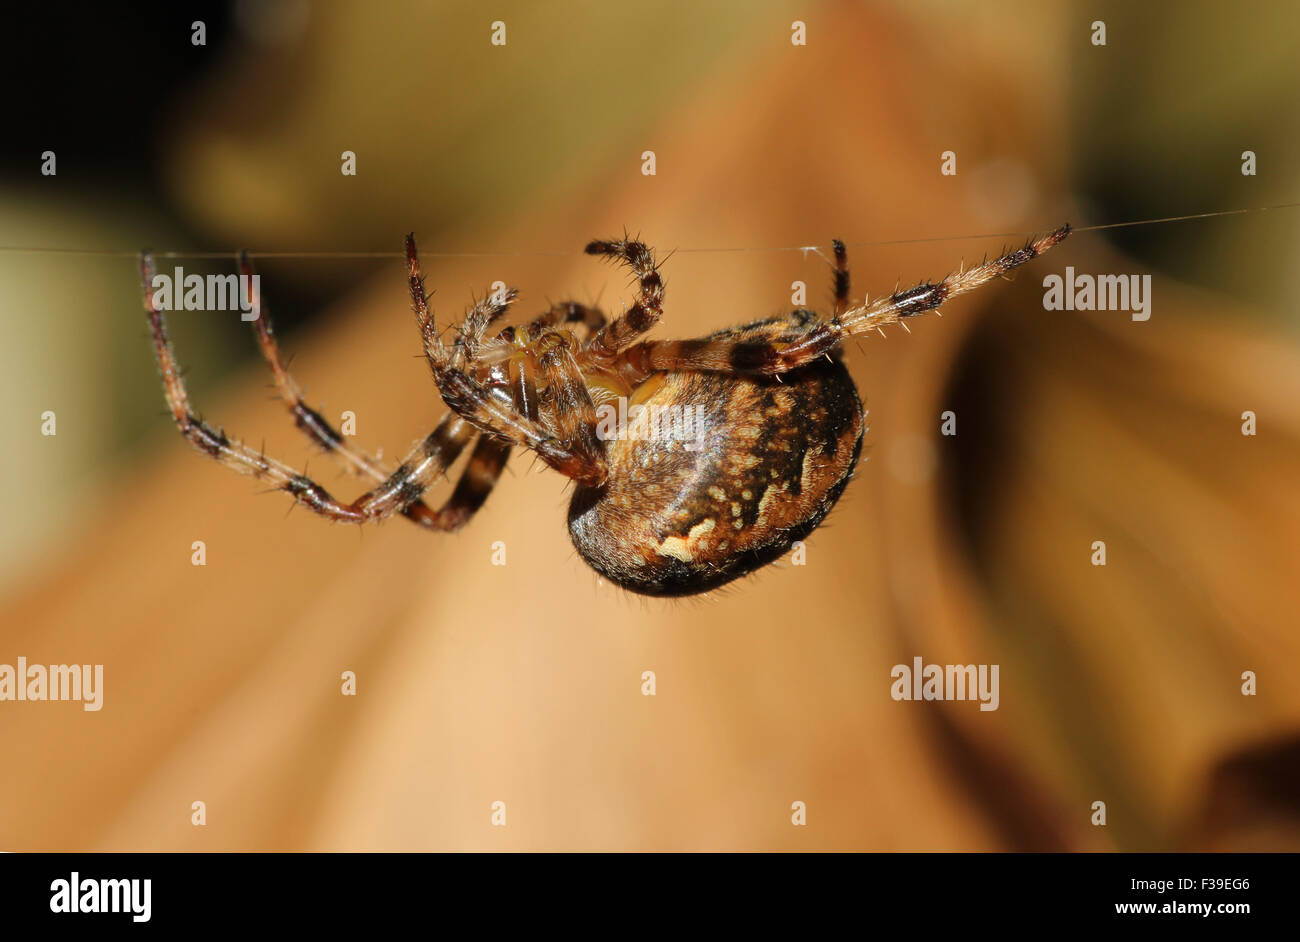 Common Garden Spider (Araneus diadematus)walking along web in the Autumn sunshine .Macro image . Stock Photo